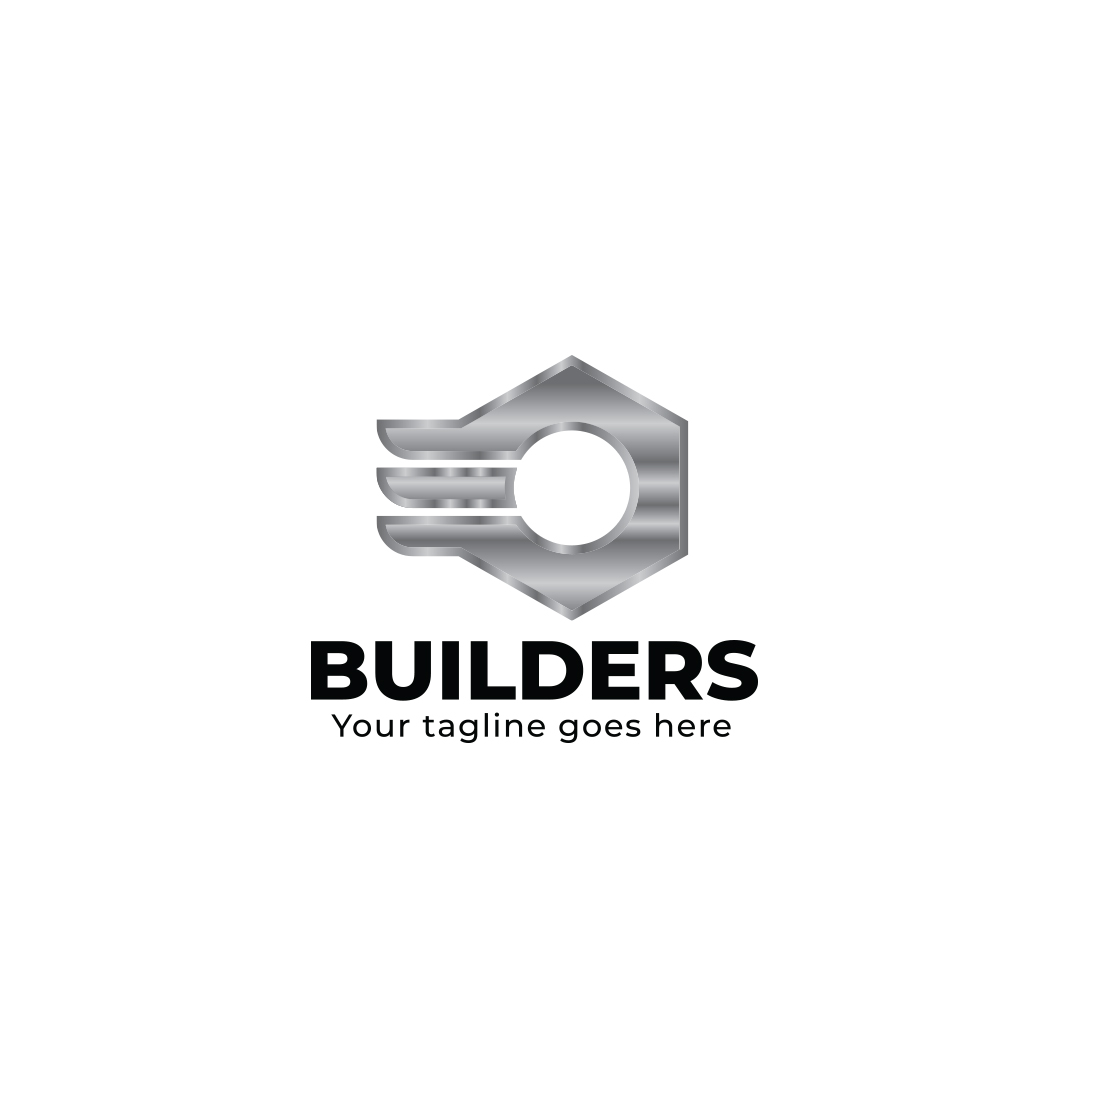 Construction Company Logo Design Cover Image.